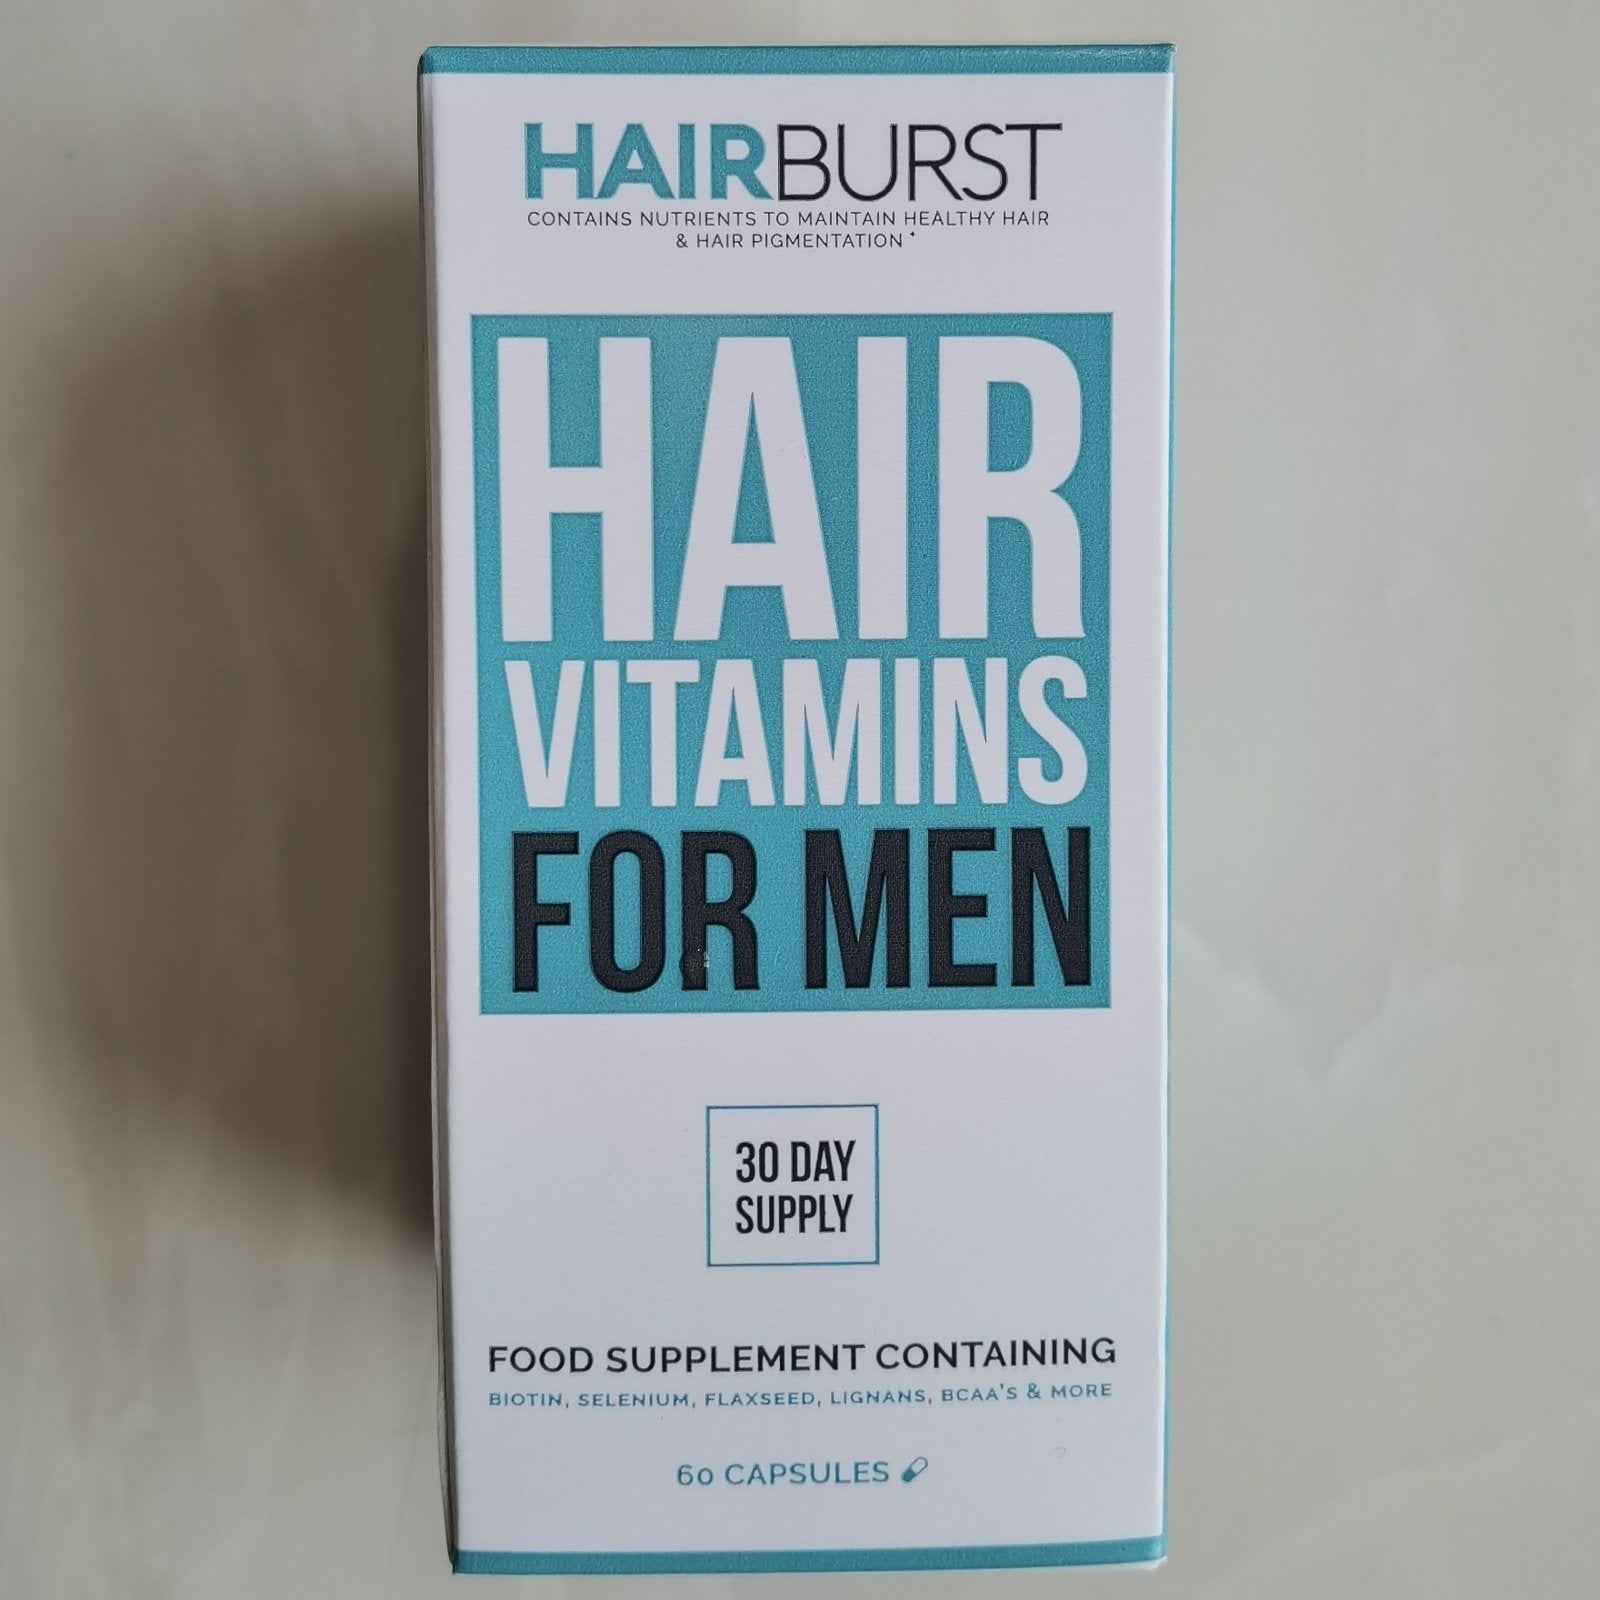 Hairburst Hair Vitamins For Men Food Supplement 60 Capsules فيتامينات شعر للرجال